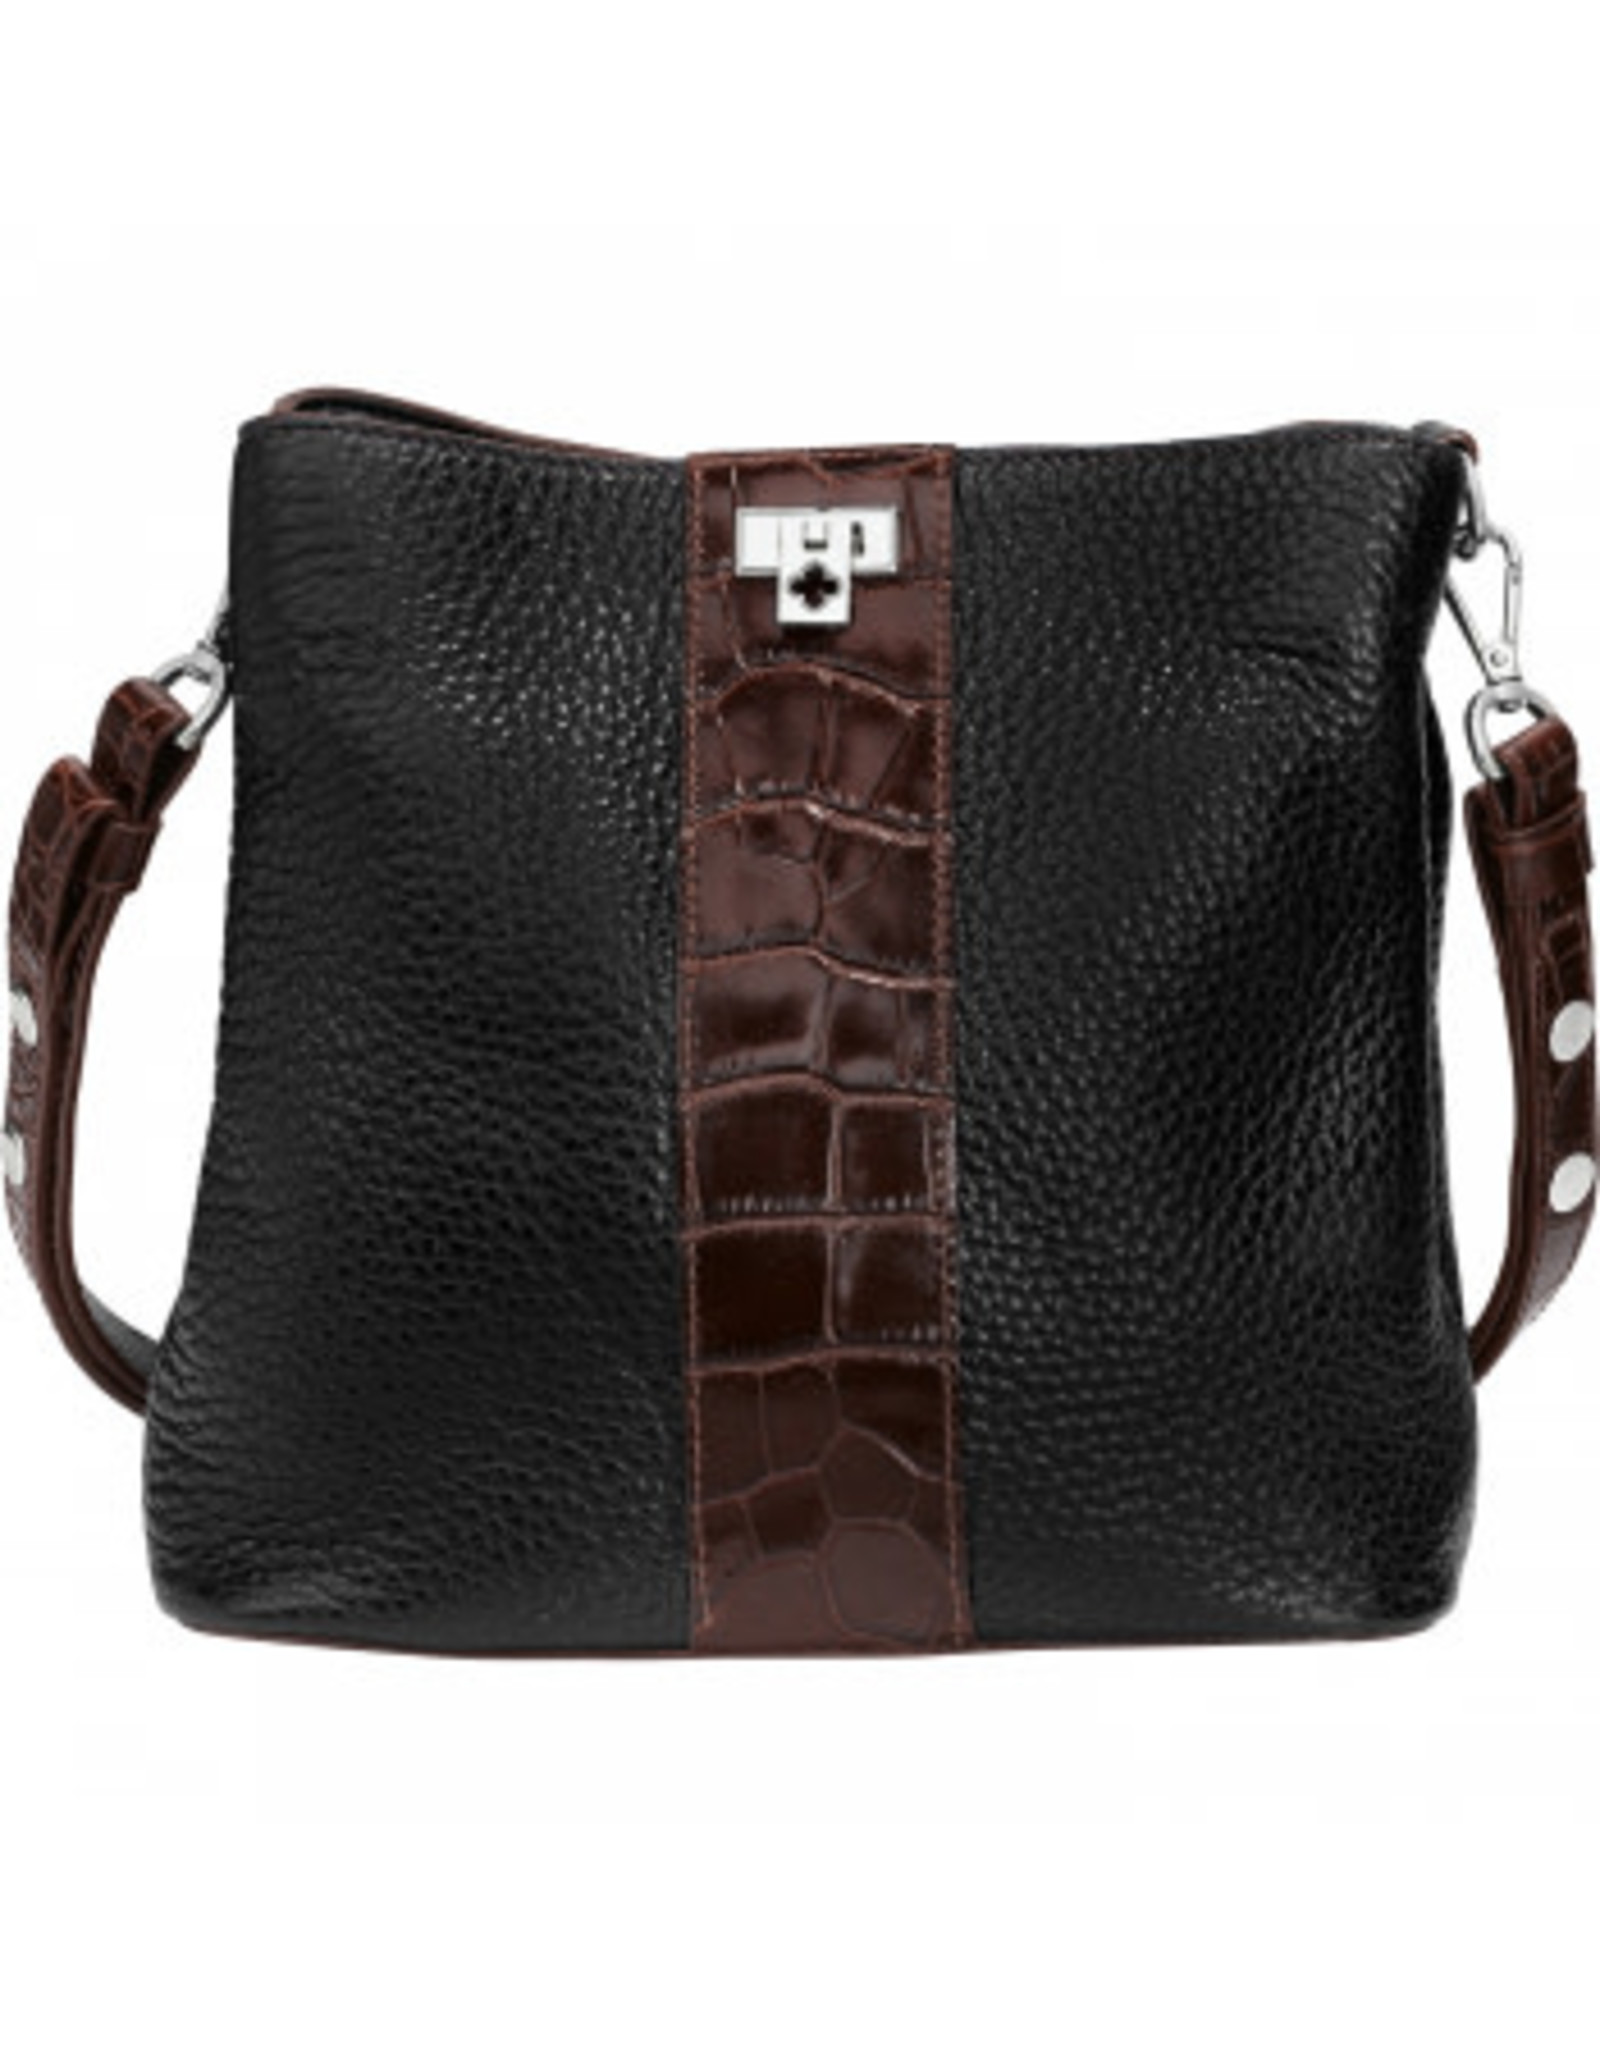 Brighton Leather Handbag Satchel Bag Blue - New